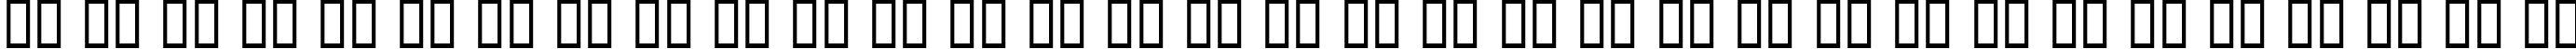 Пример написания русского алфавита шрифтом Lead Coat